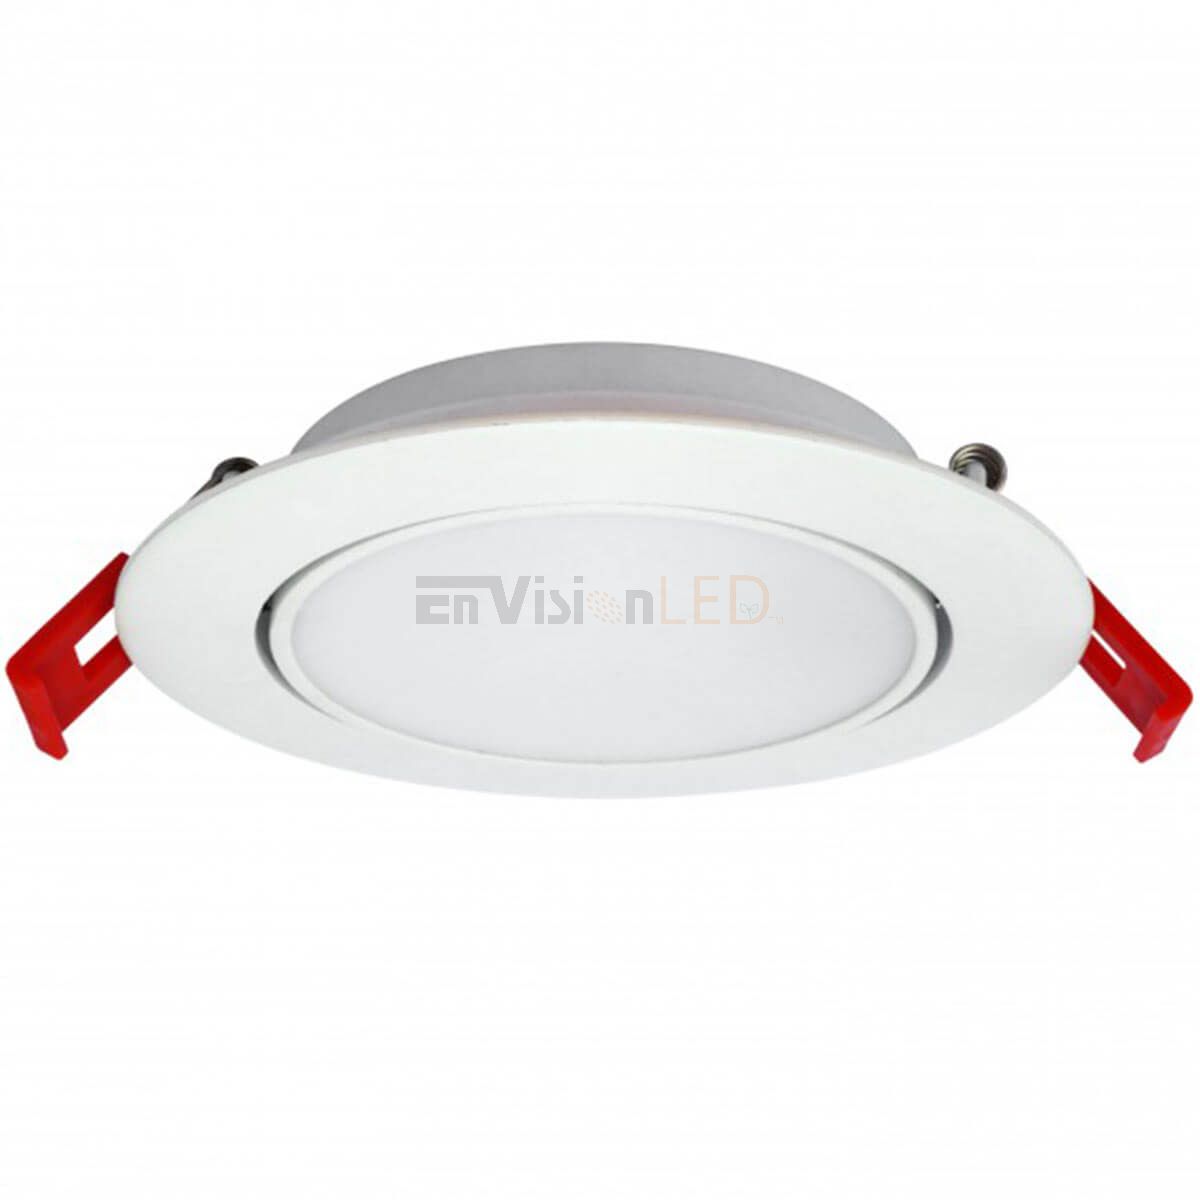 Envision 4" LED J-Box Round TILT Panel Downlight 5CCT- White, Black, Brushed Nickel - Sonic Electric